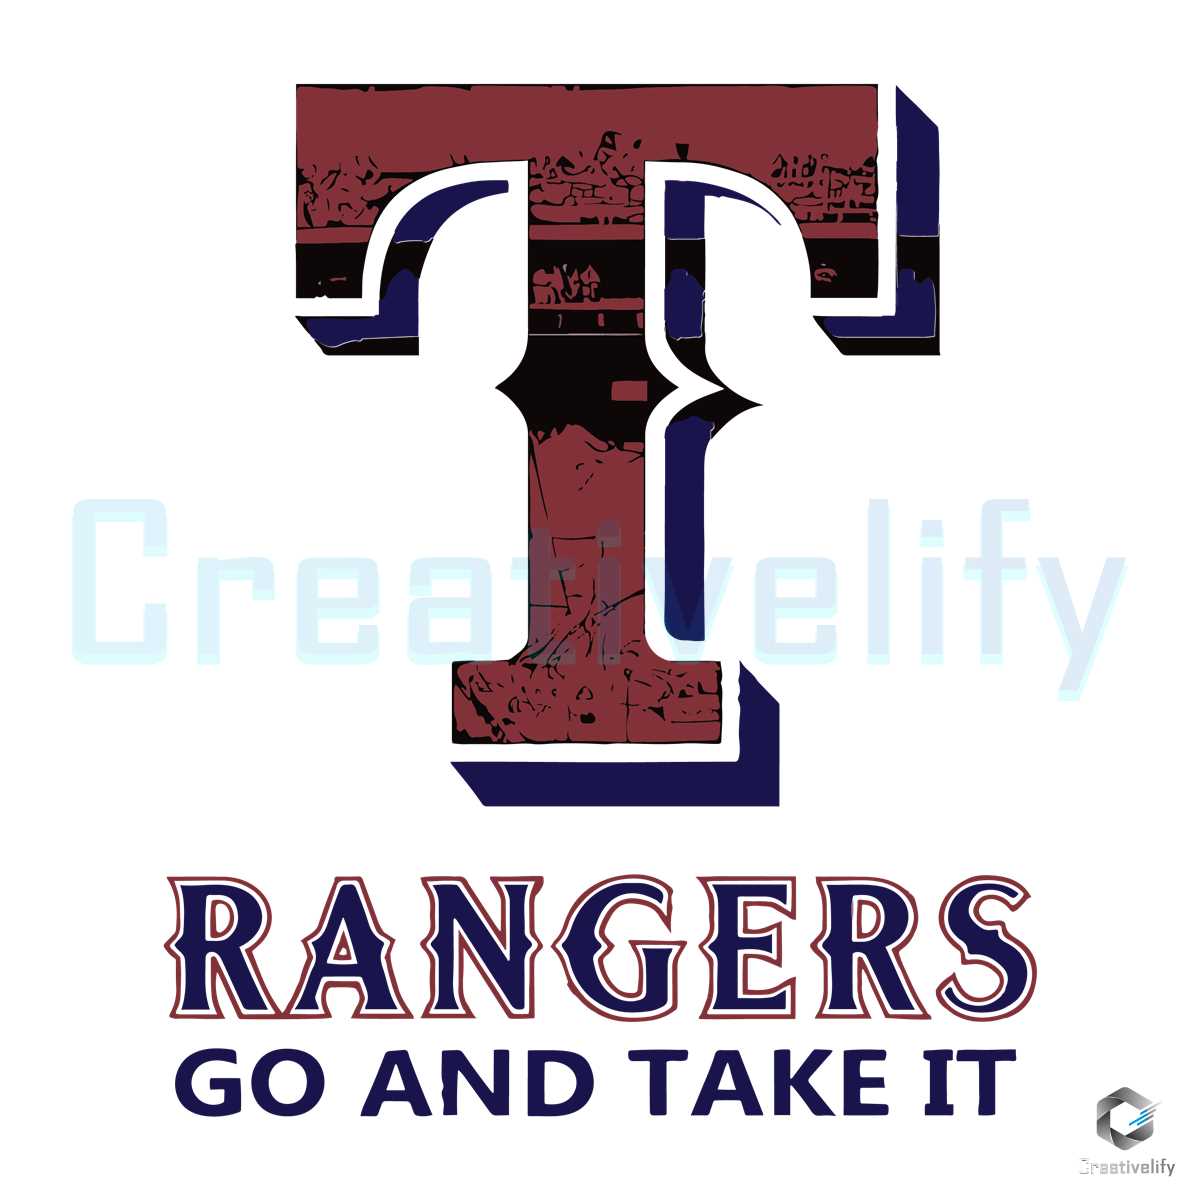 MLB Logo Texas Rangers, Texas Rangers SVG, Vector Texas Rangers